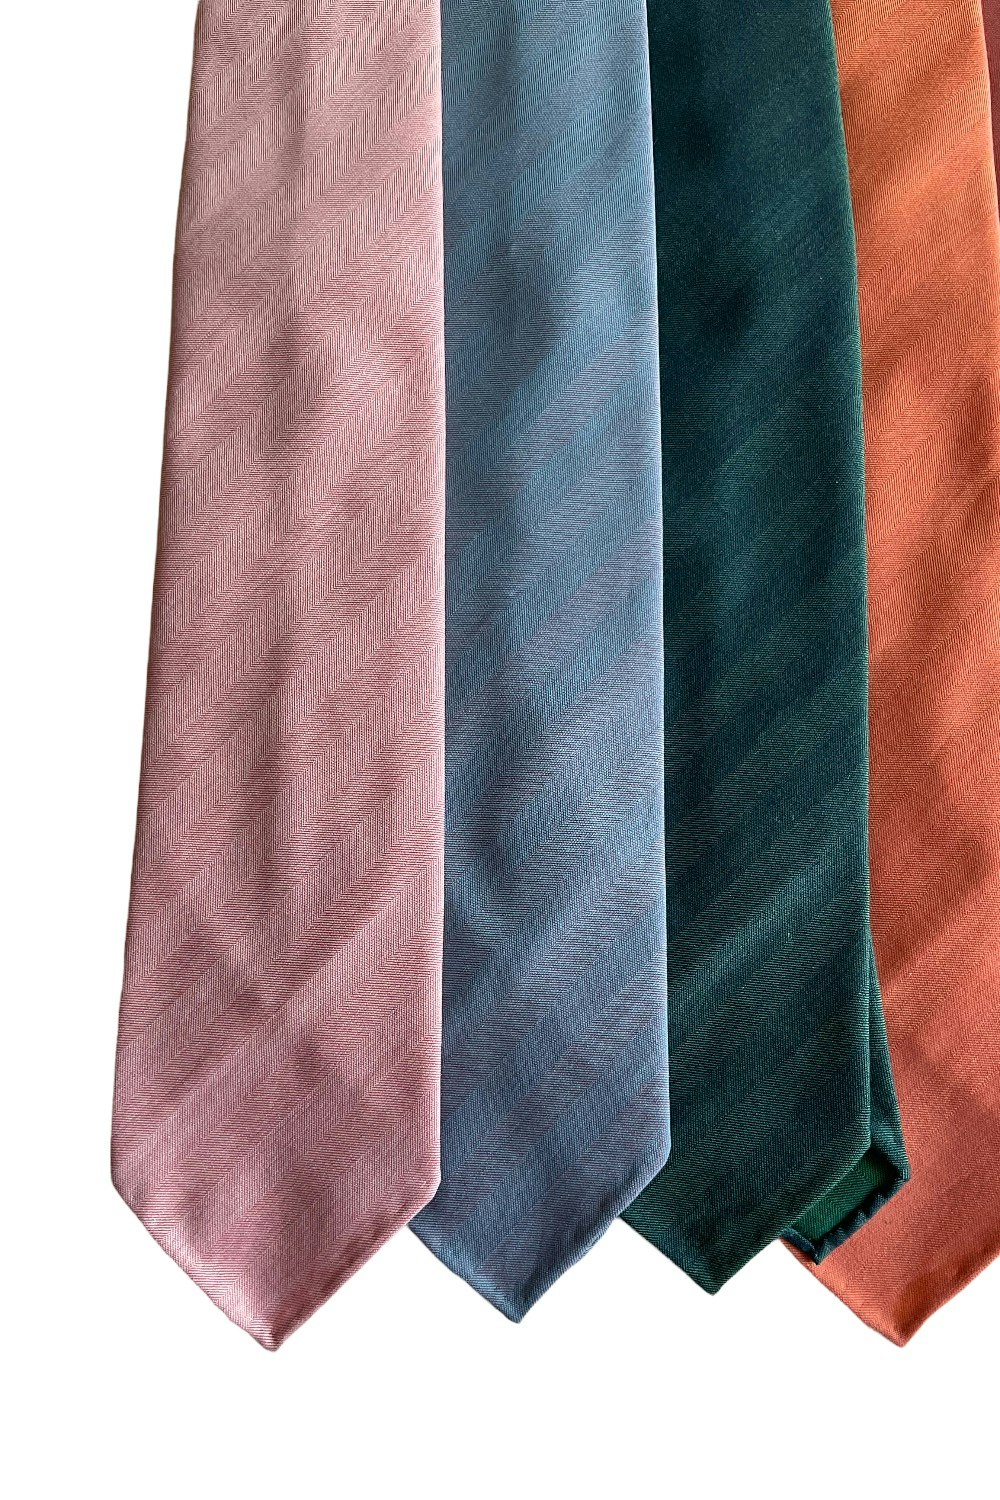 Solaro Wool/Cotton Tie - Untipped - Navy Blue